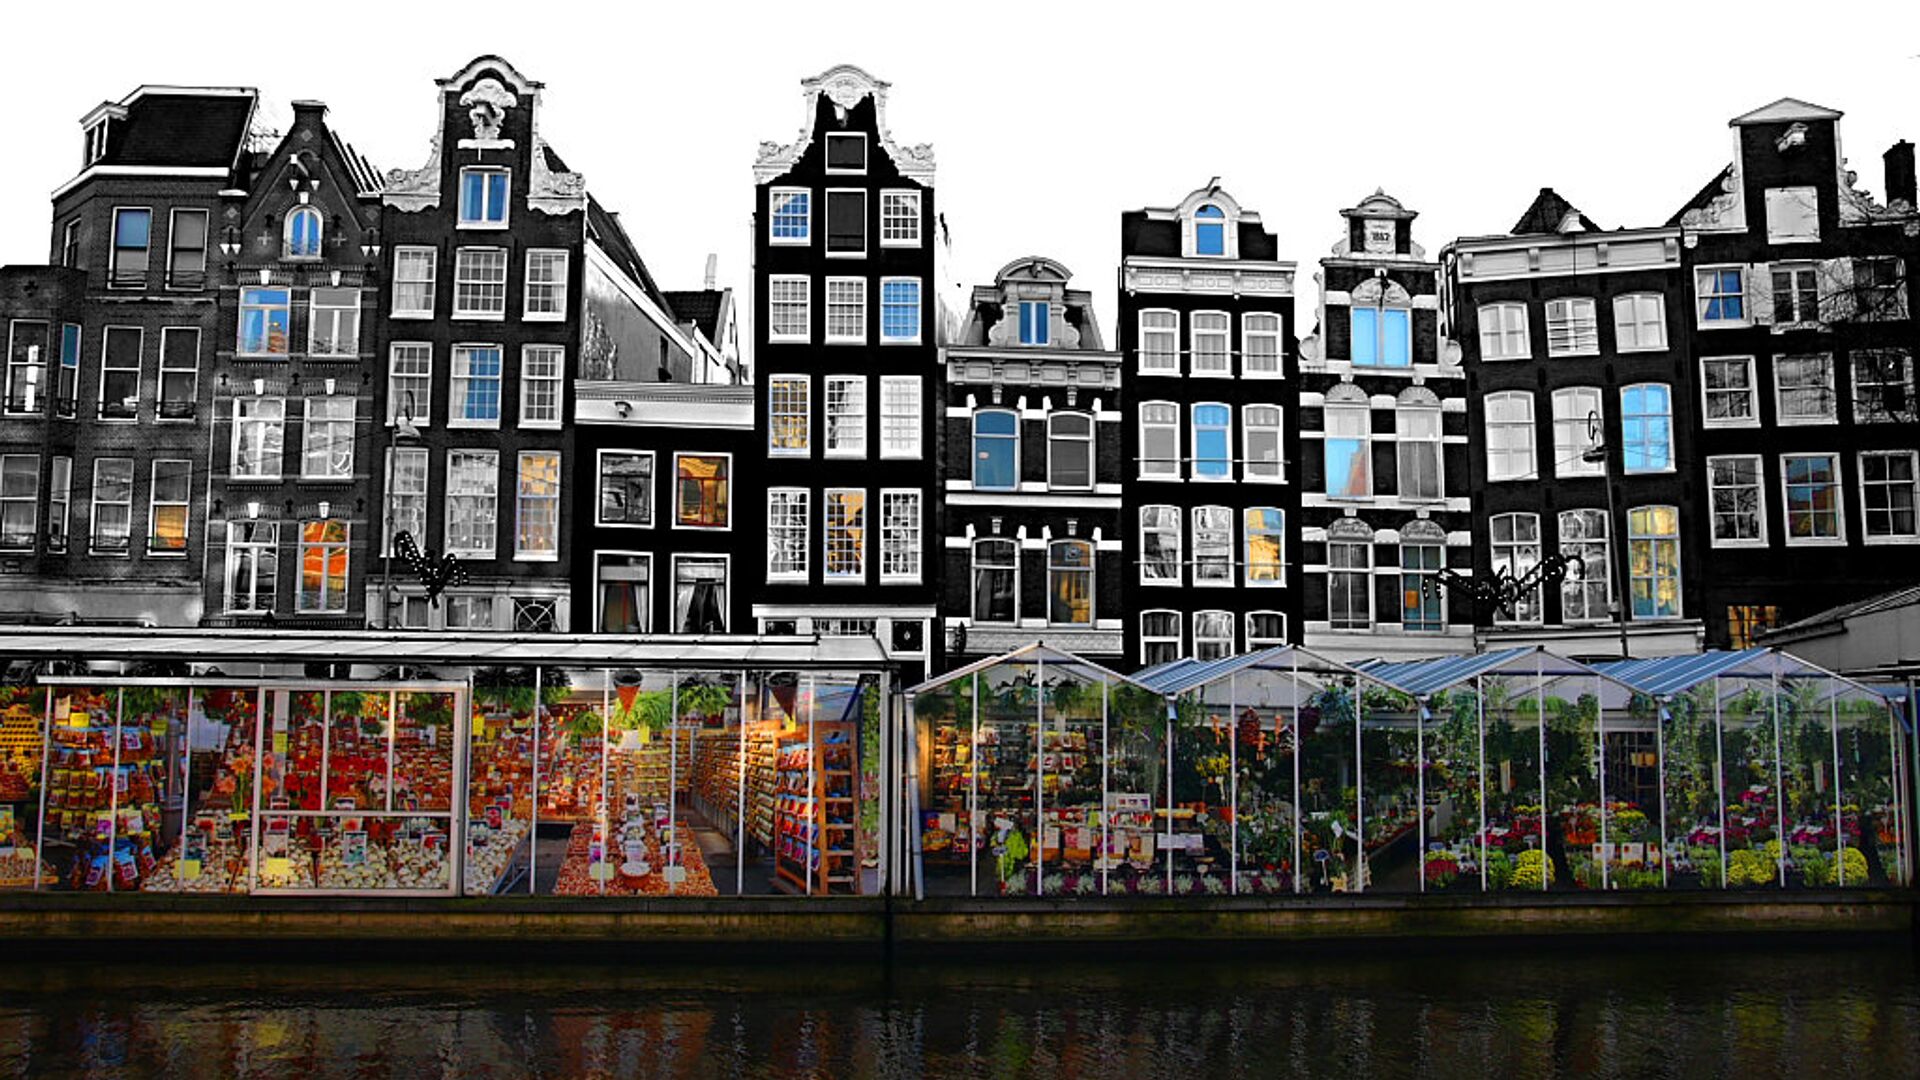 Цветочный рынок Блюменмаркт, Амстердам, Голландия